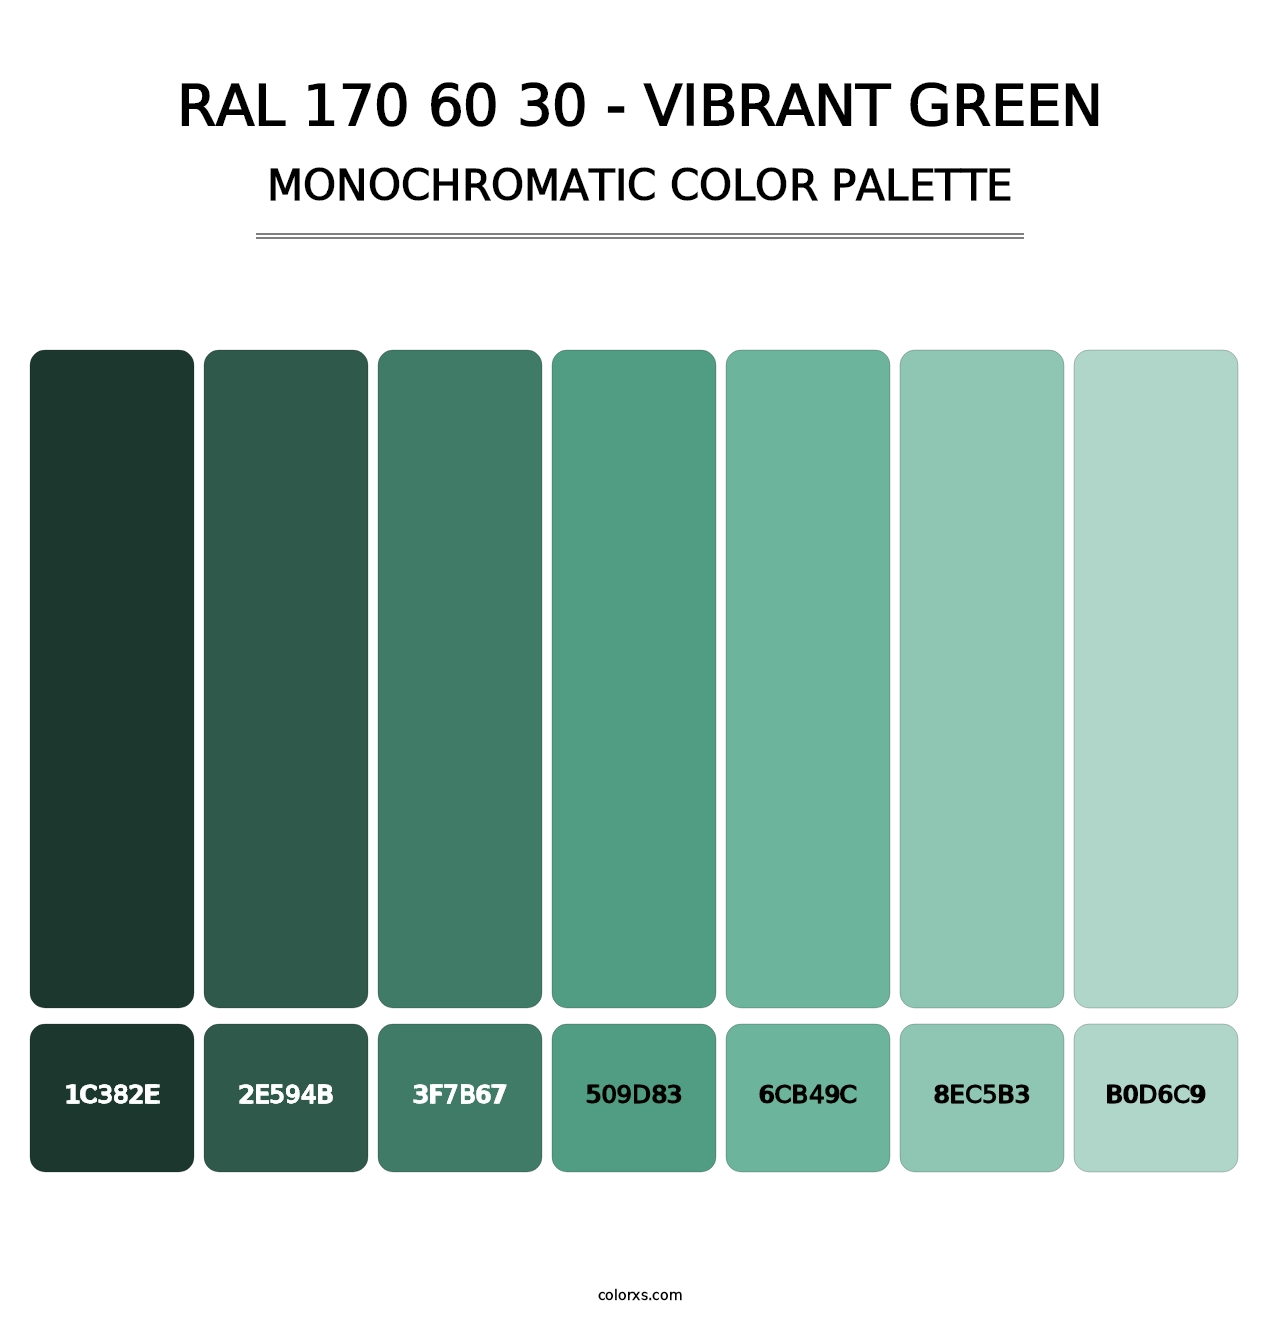 RAL 170 60 30 - Vibrant Green - Monochromatic Color Palette